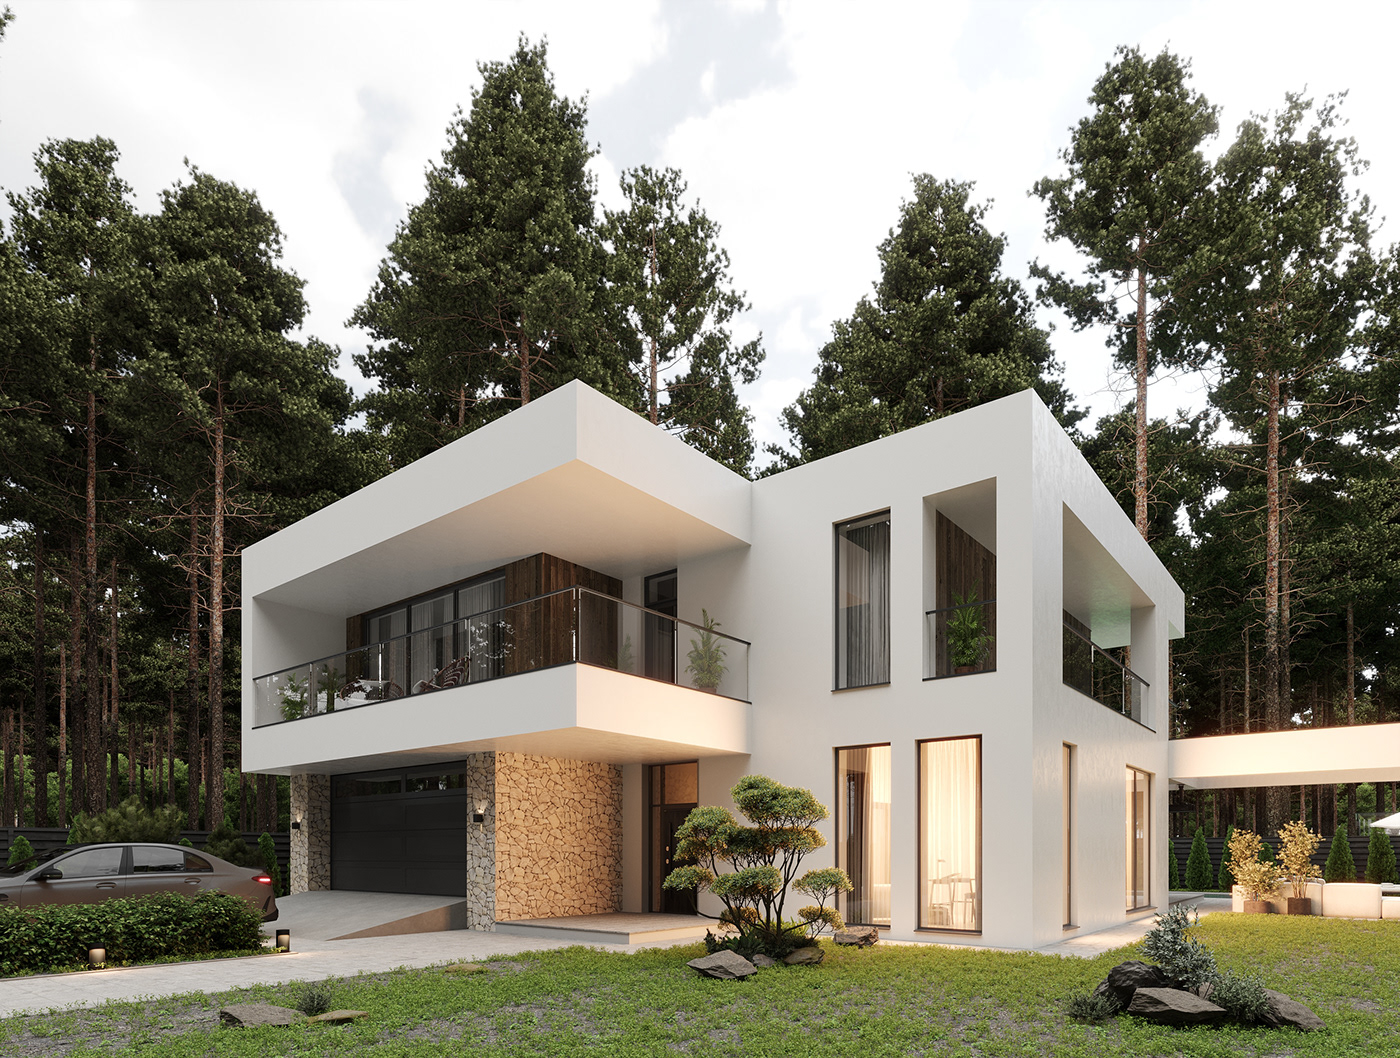 architecture visualization Render exterior archviz modern corona design minimalist house